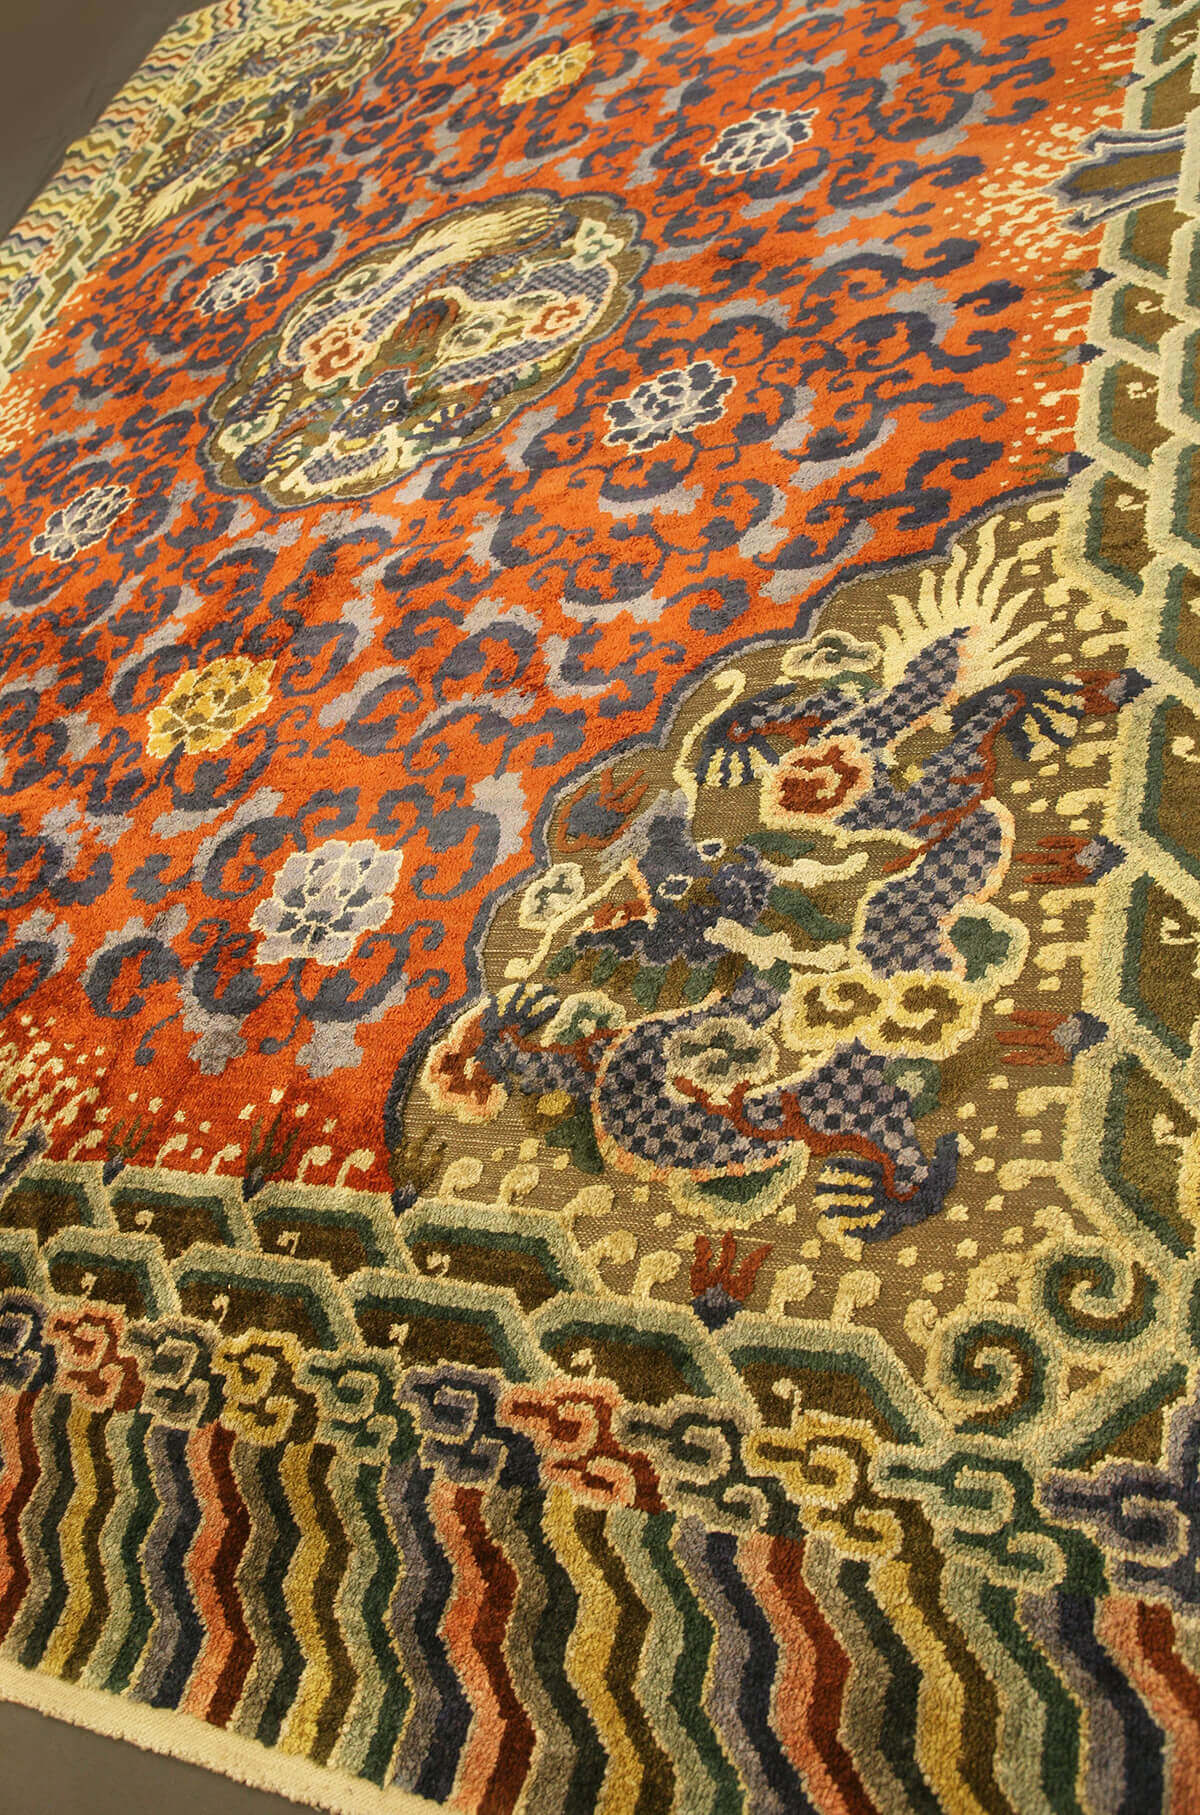 Tappeto Cinese Antico Tappeto del Palazzo Imperiale Cina, Seta & Metallo (YU YANG) n°:54587294